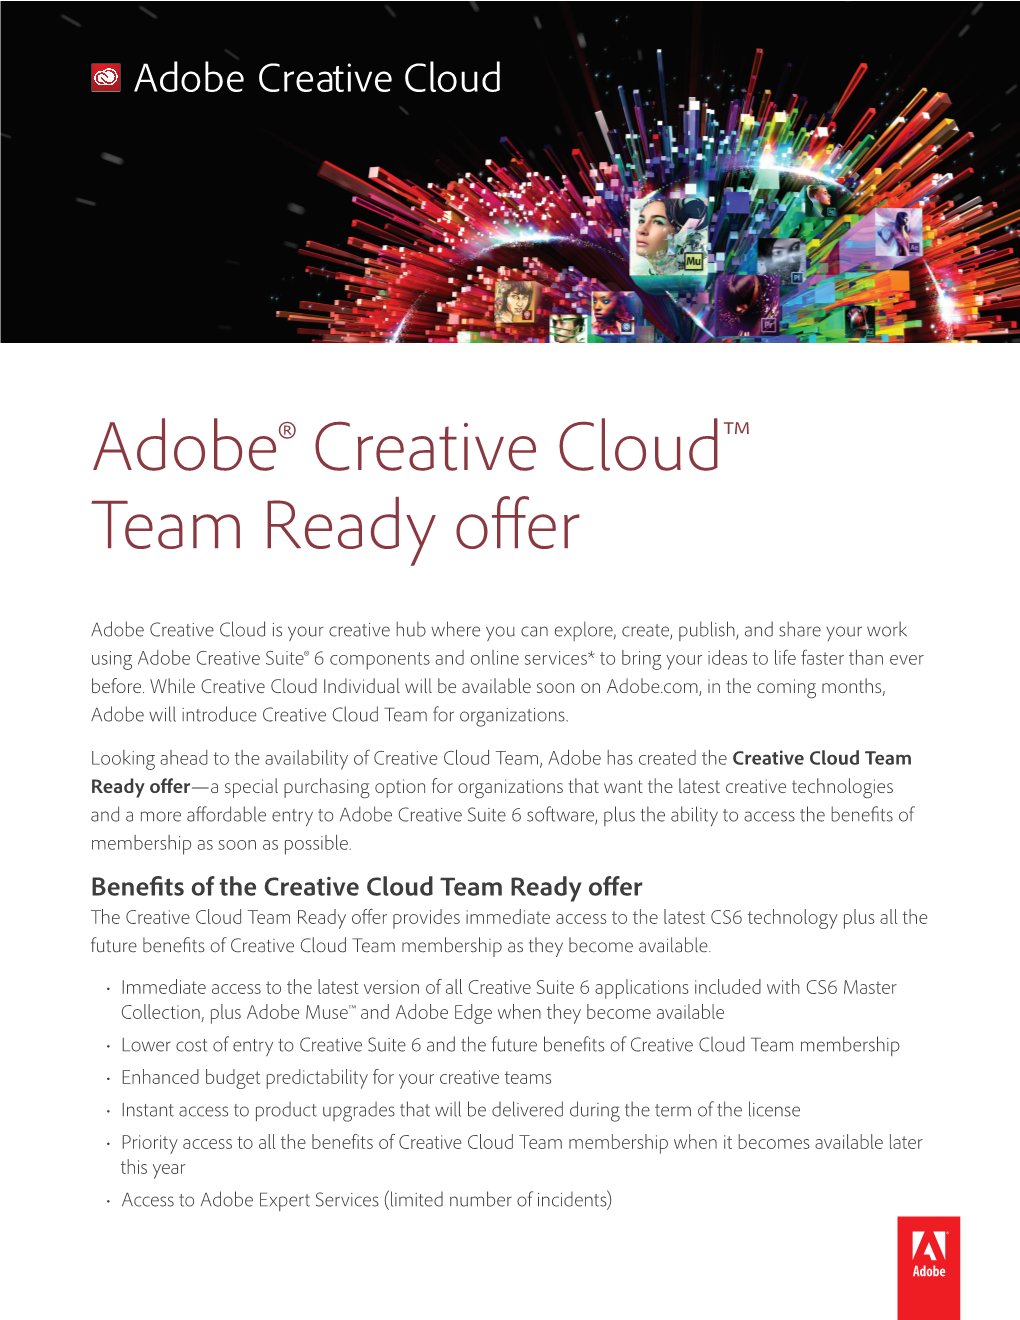 Creative Cloud Team Ready Offer